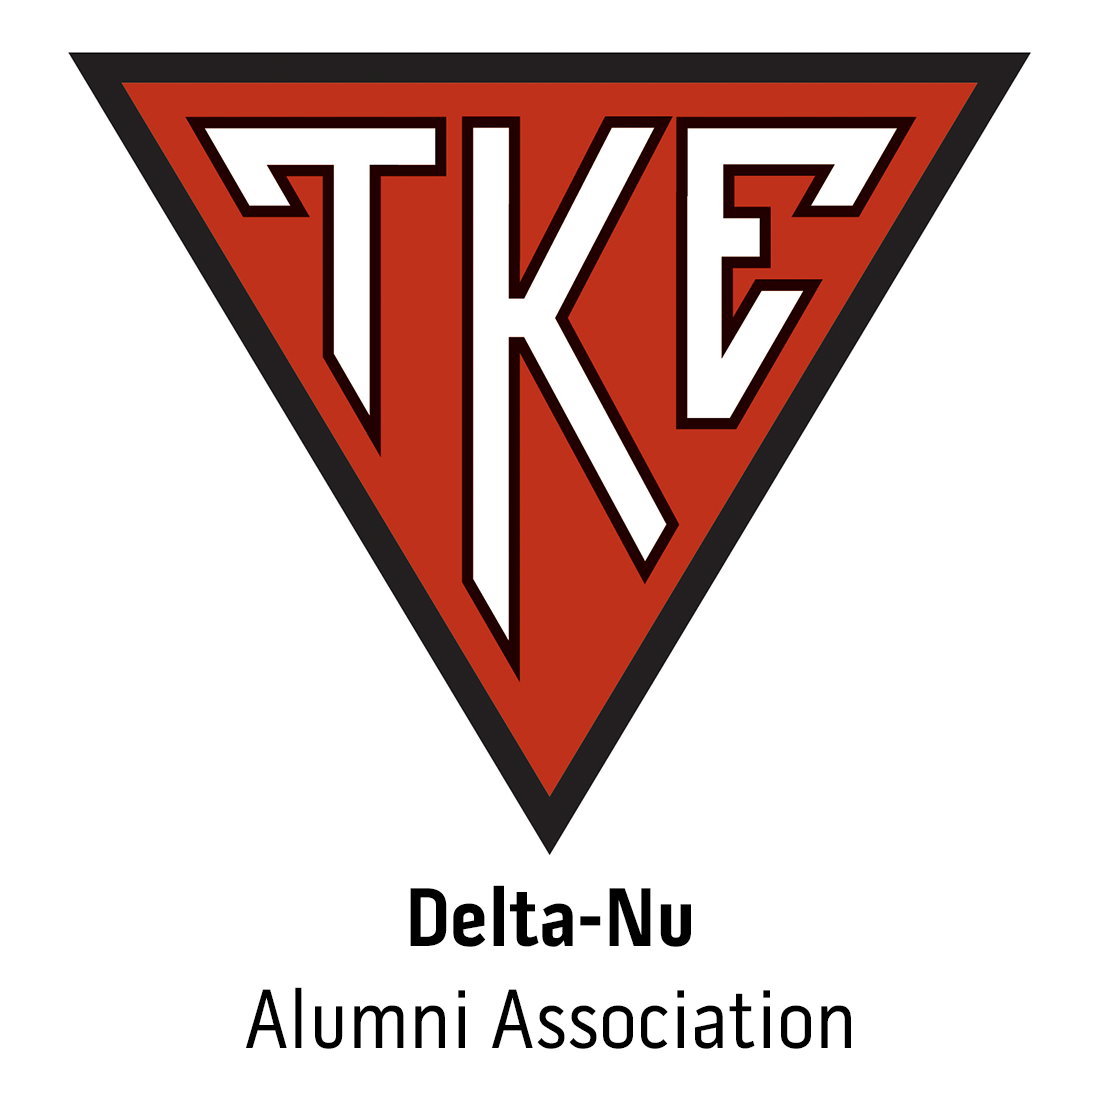 Delta-Nu Alumni Association at Northwest Missouri State University